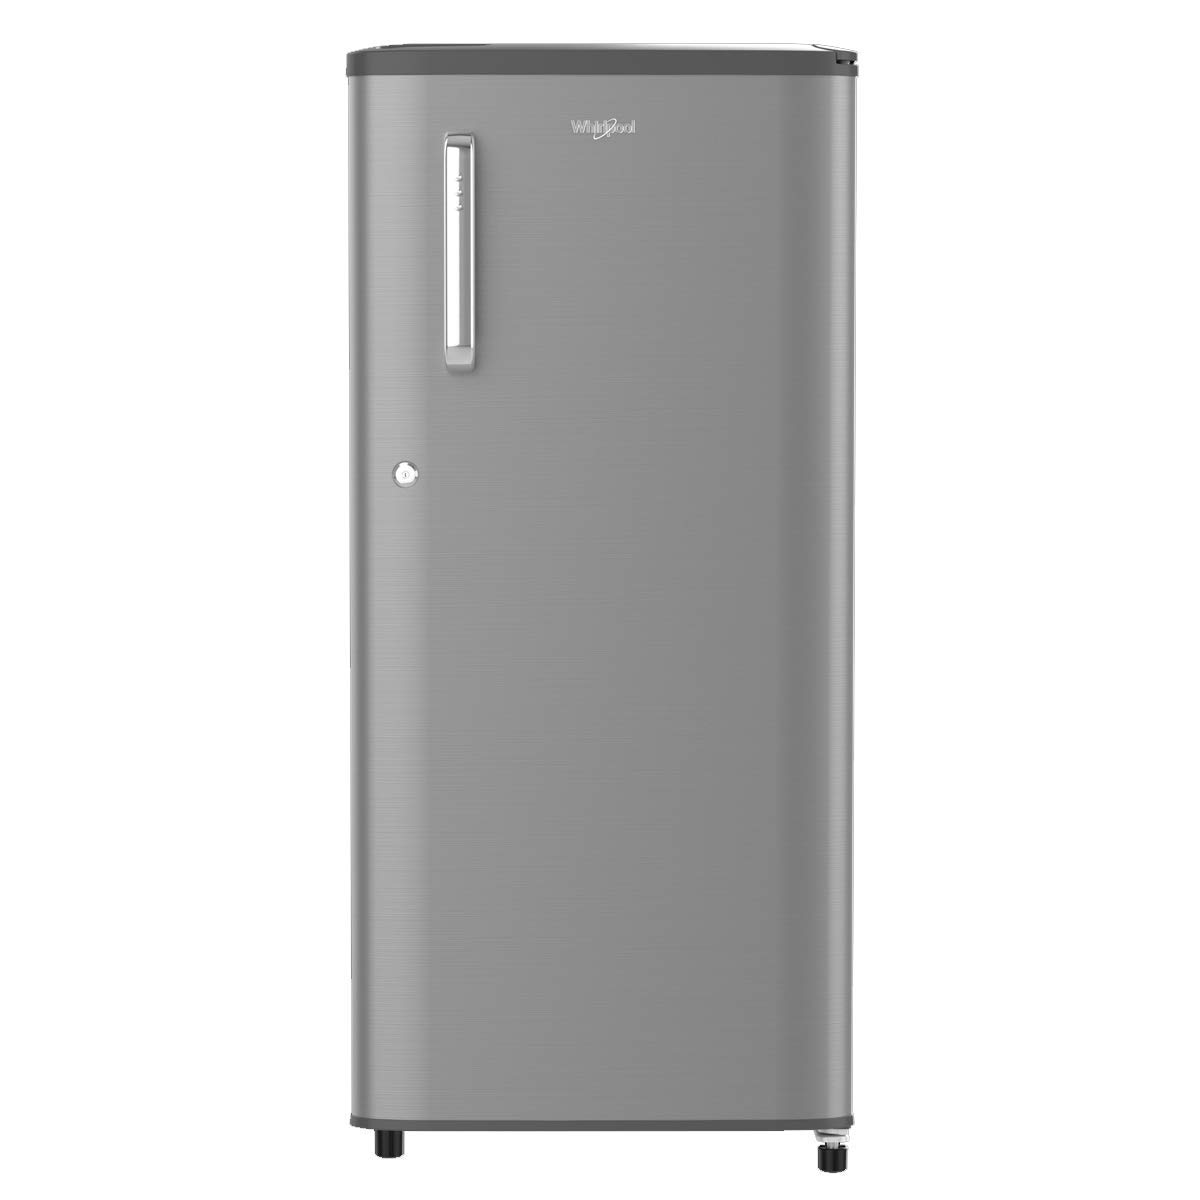 Whirlpool 184 L 4 Star Inverter Direct-Cool Single Door Refrigerator